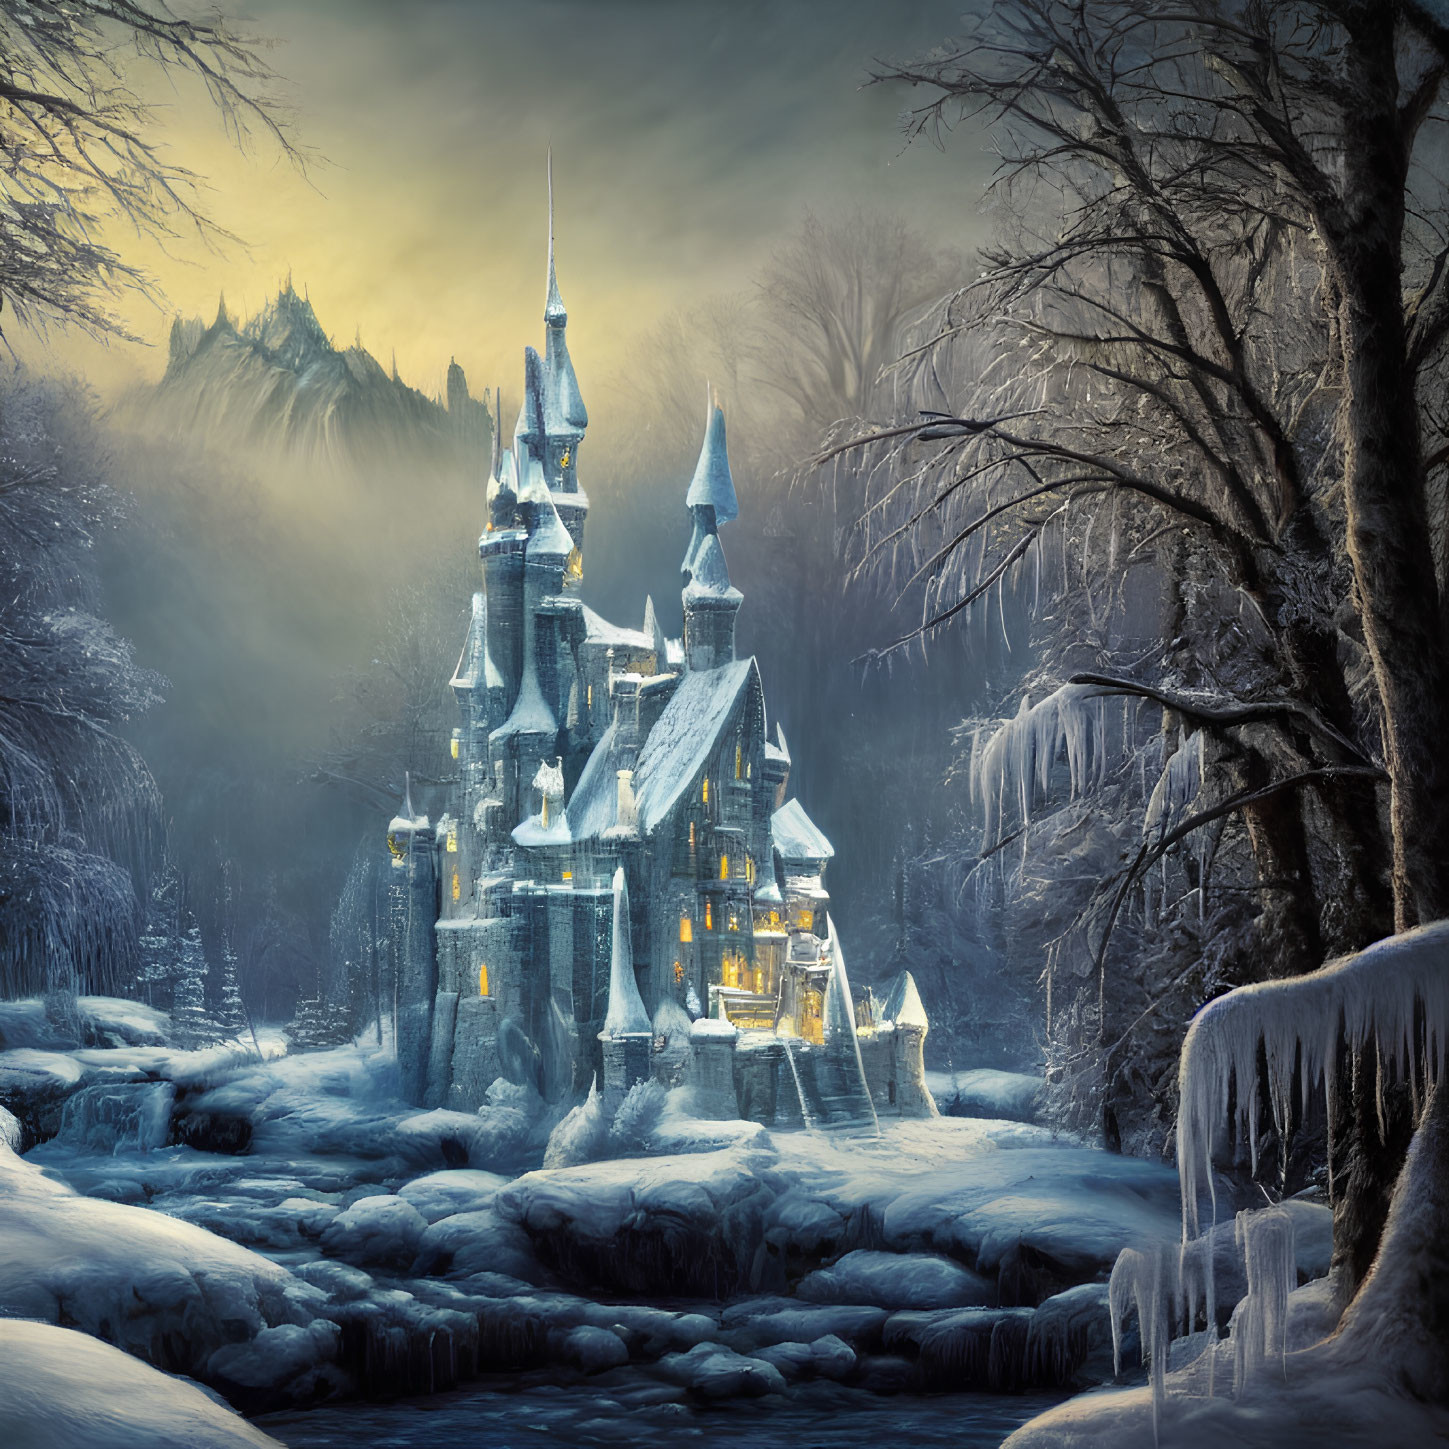 Mystical winter castle with warm glowing lights in snowy landscape